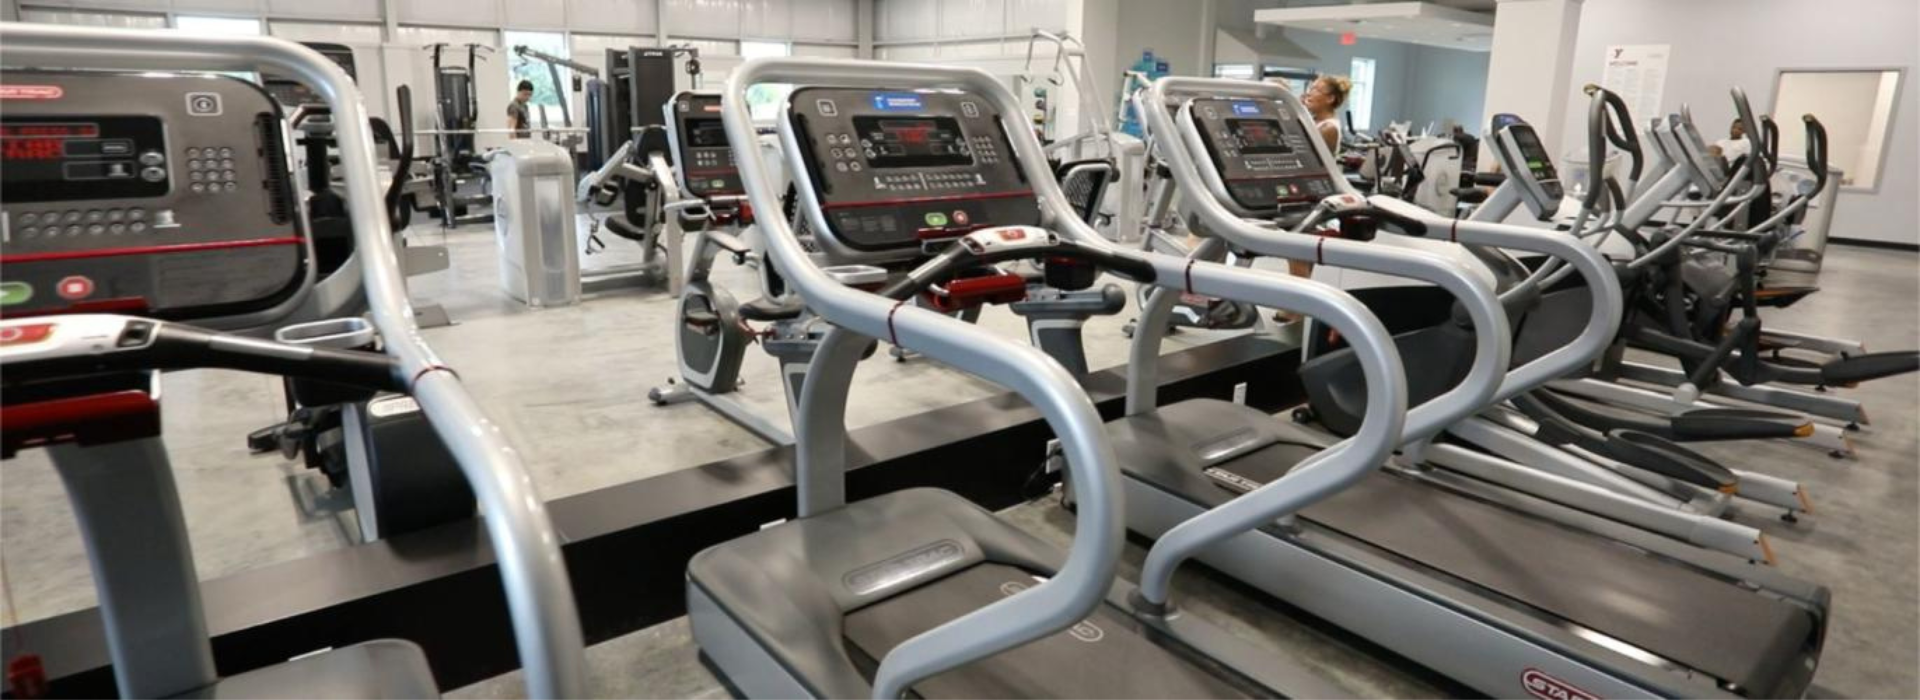 Inside of Northampton County YMCA cardio area with treadmills